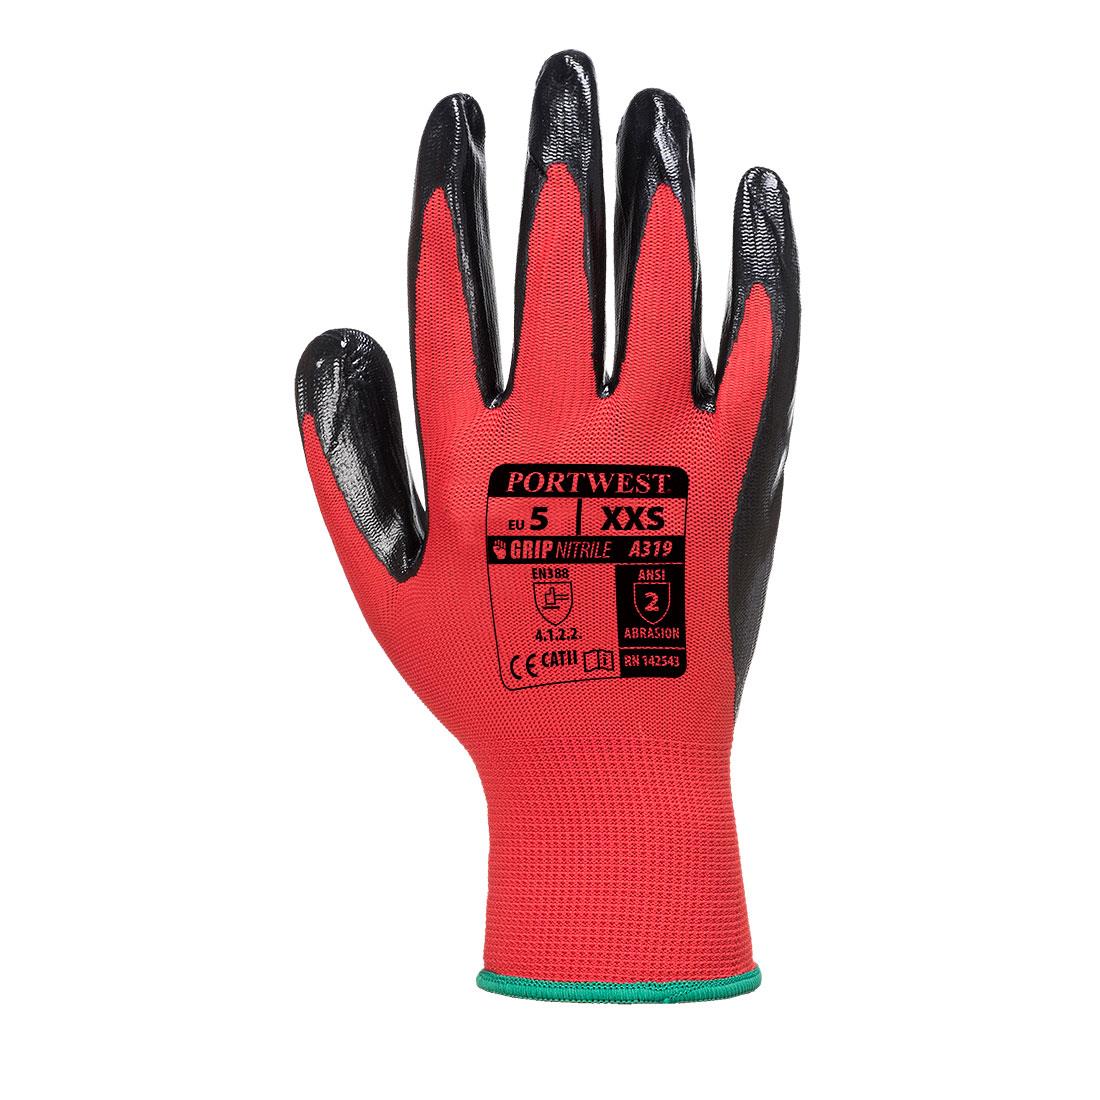 Portwest Flexo-Grip red/black nitrile dipped abrasion resistant work glove #A319